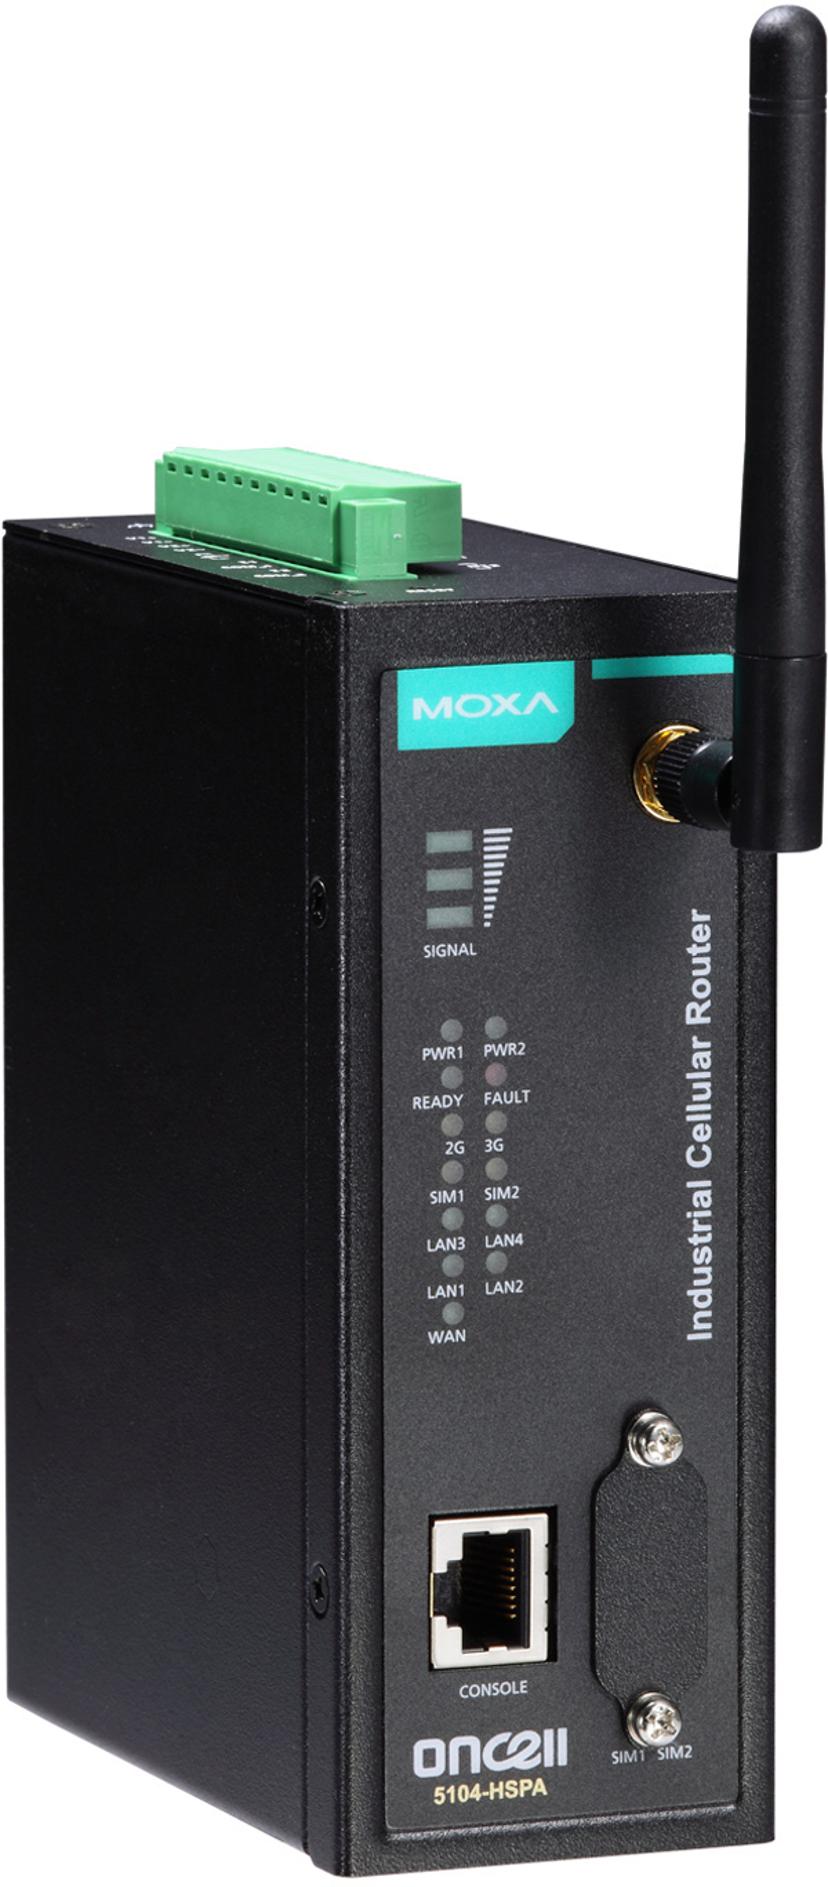 Moxa OnCell 5104-HSPA, teollinen 3G-reititin